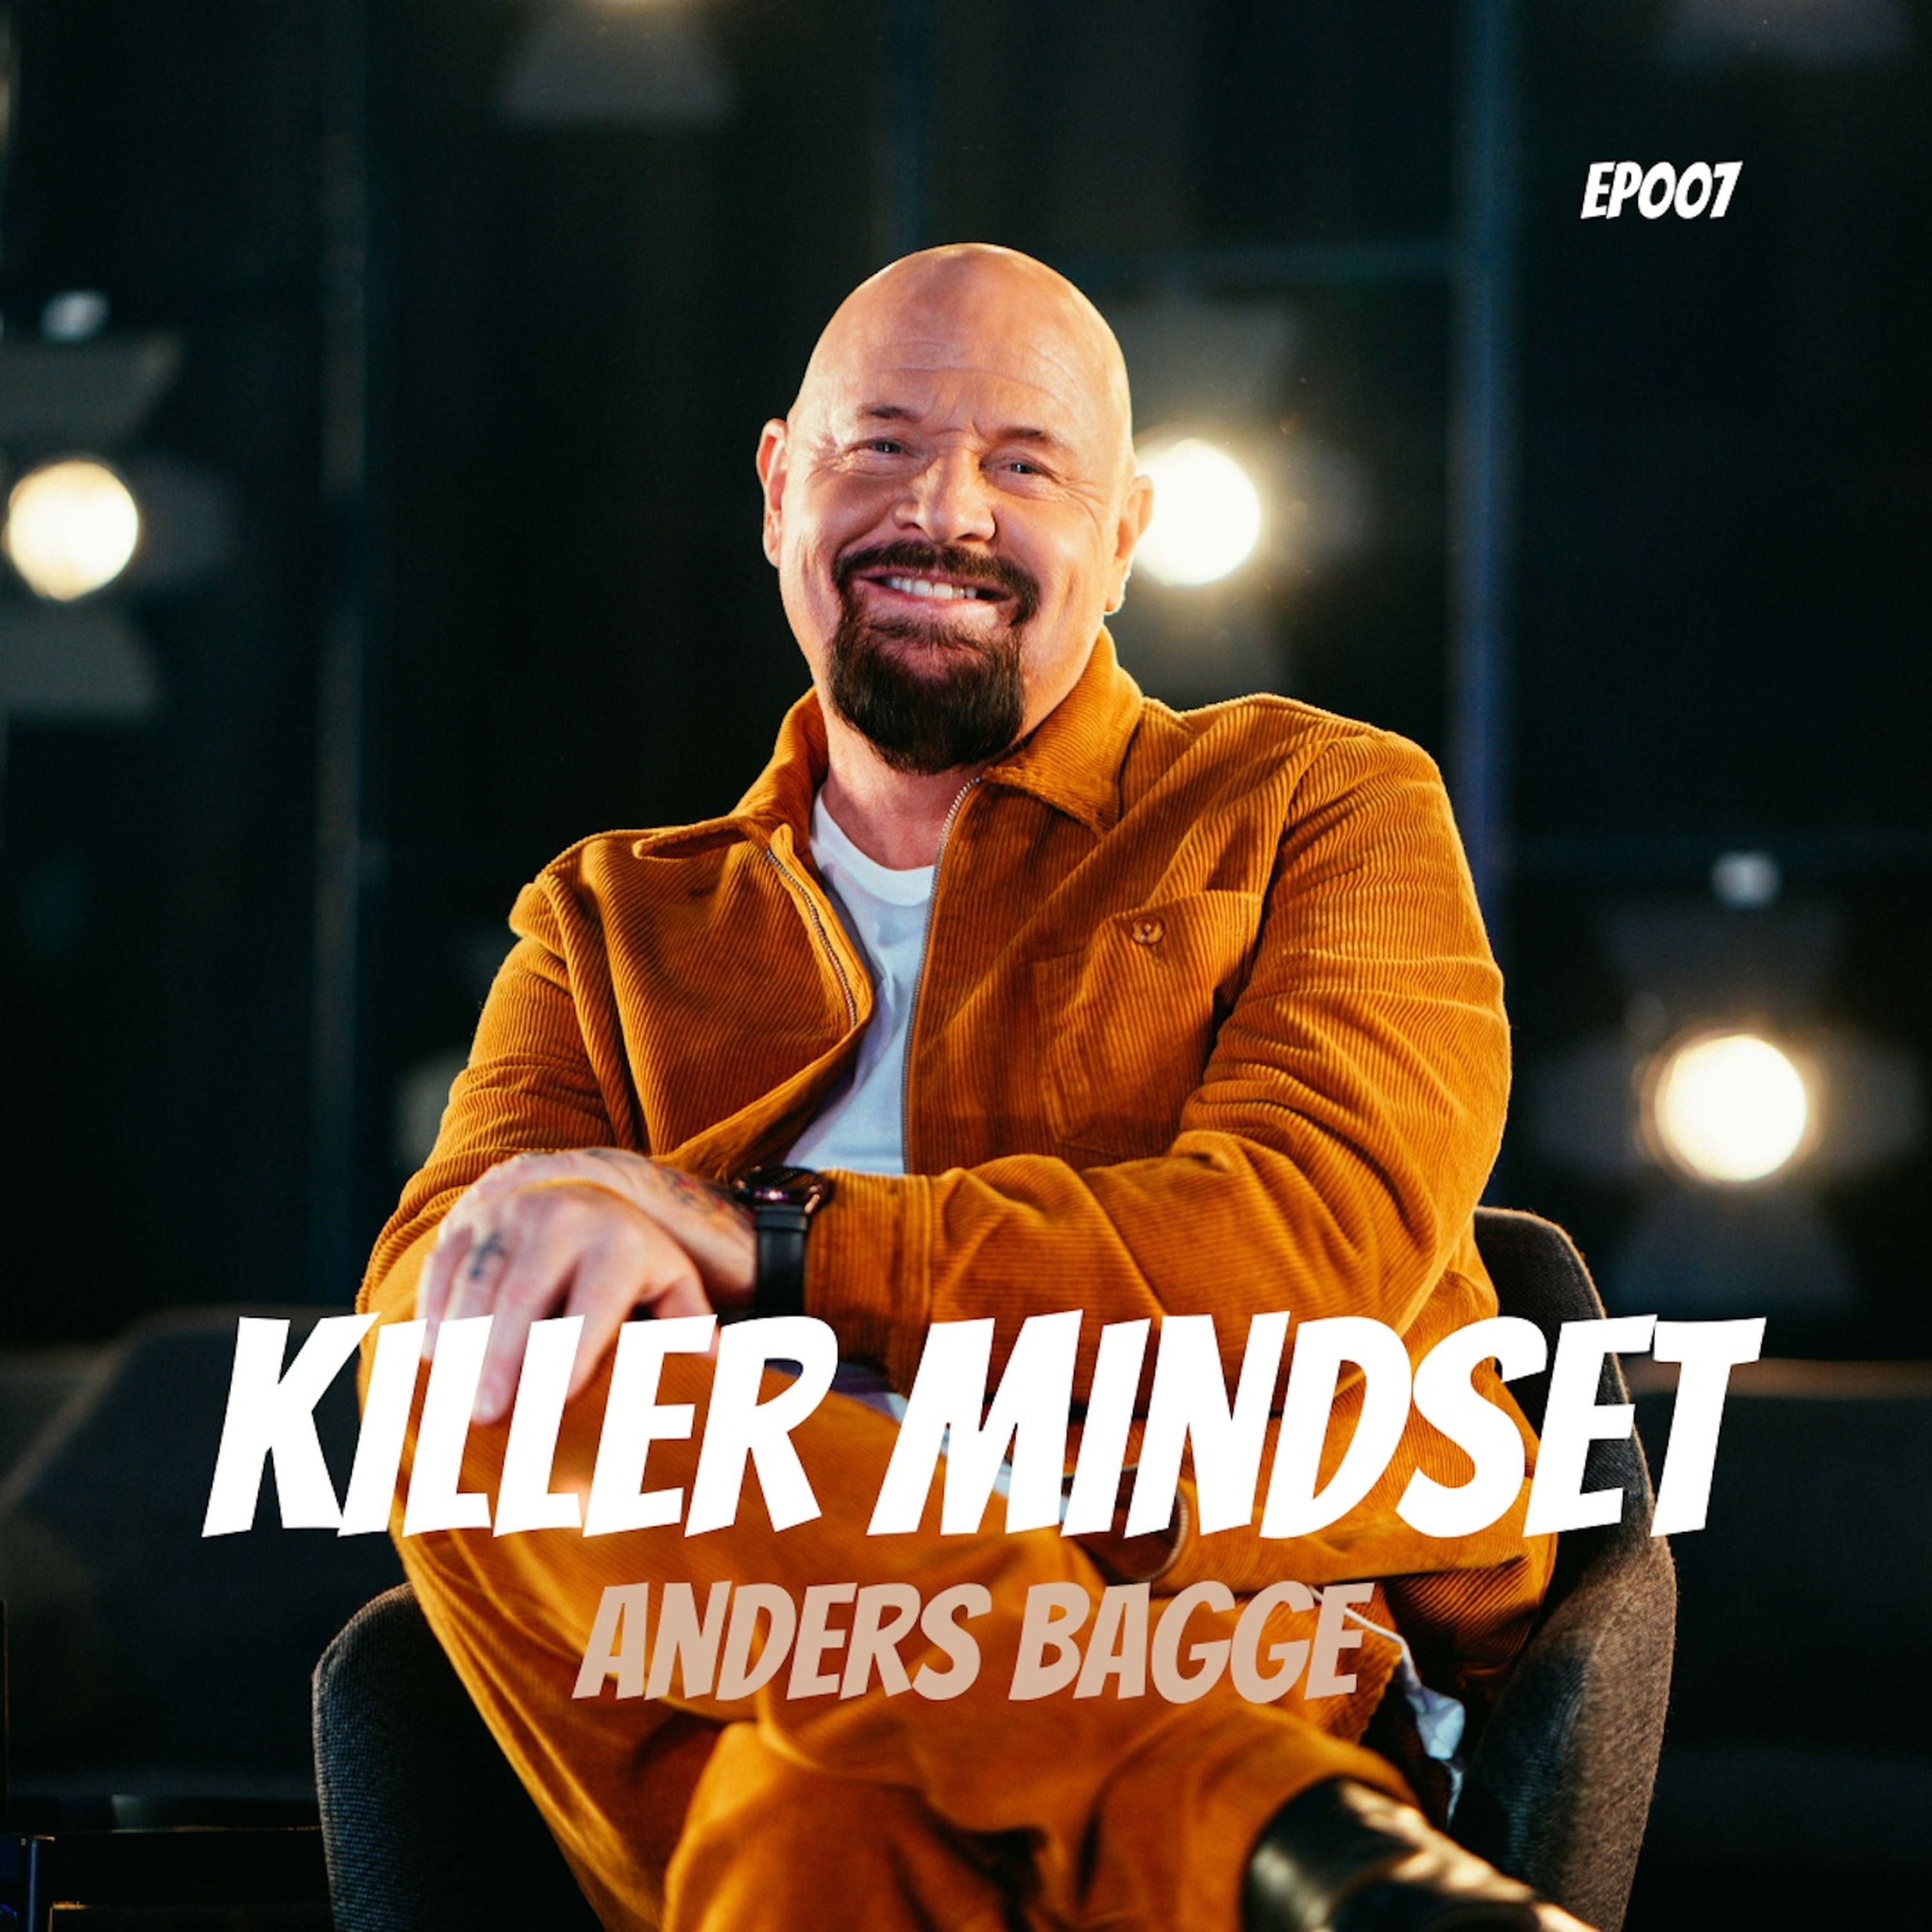 Episod 7 - Anders Bagges utmaningar